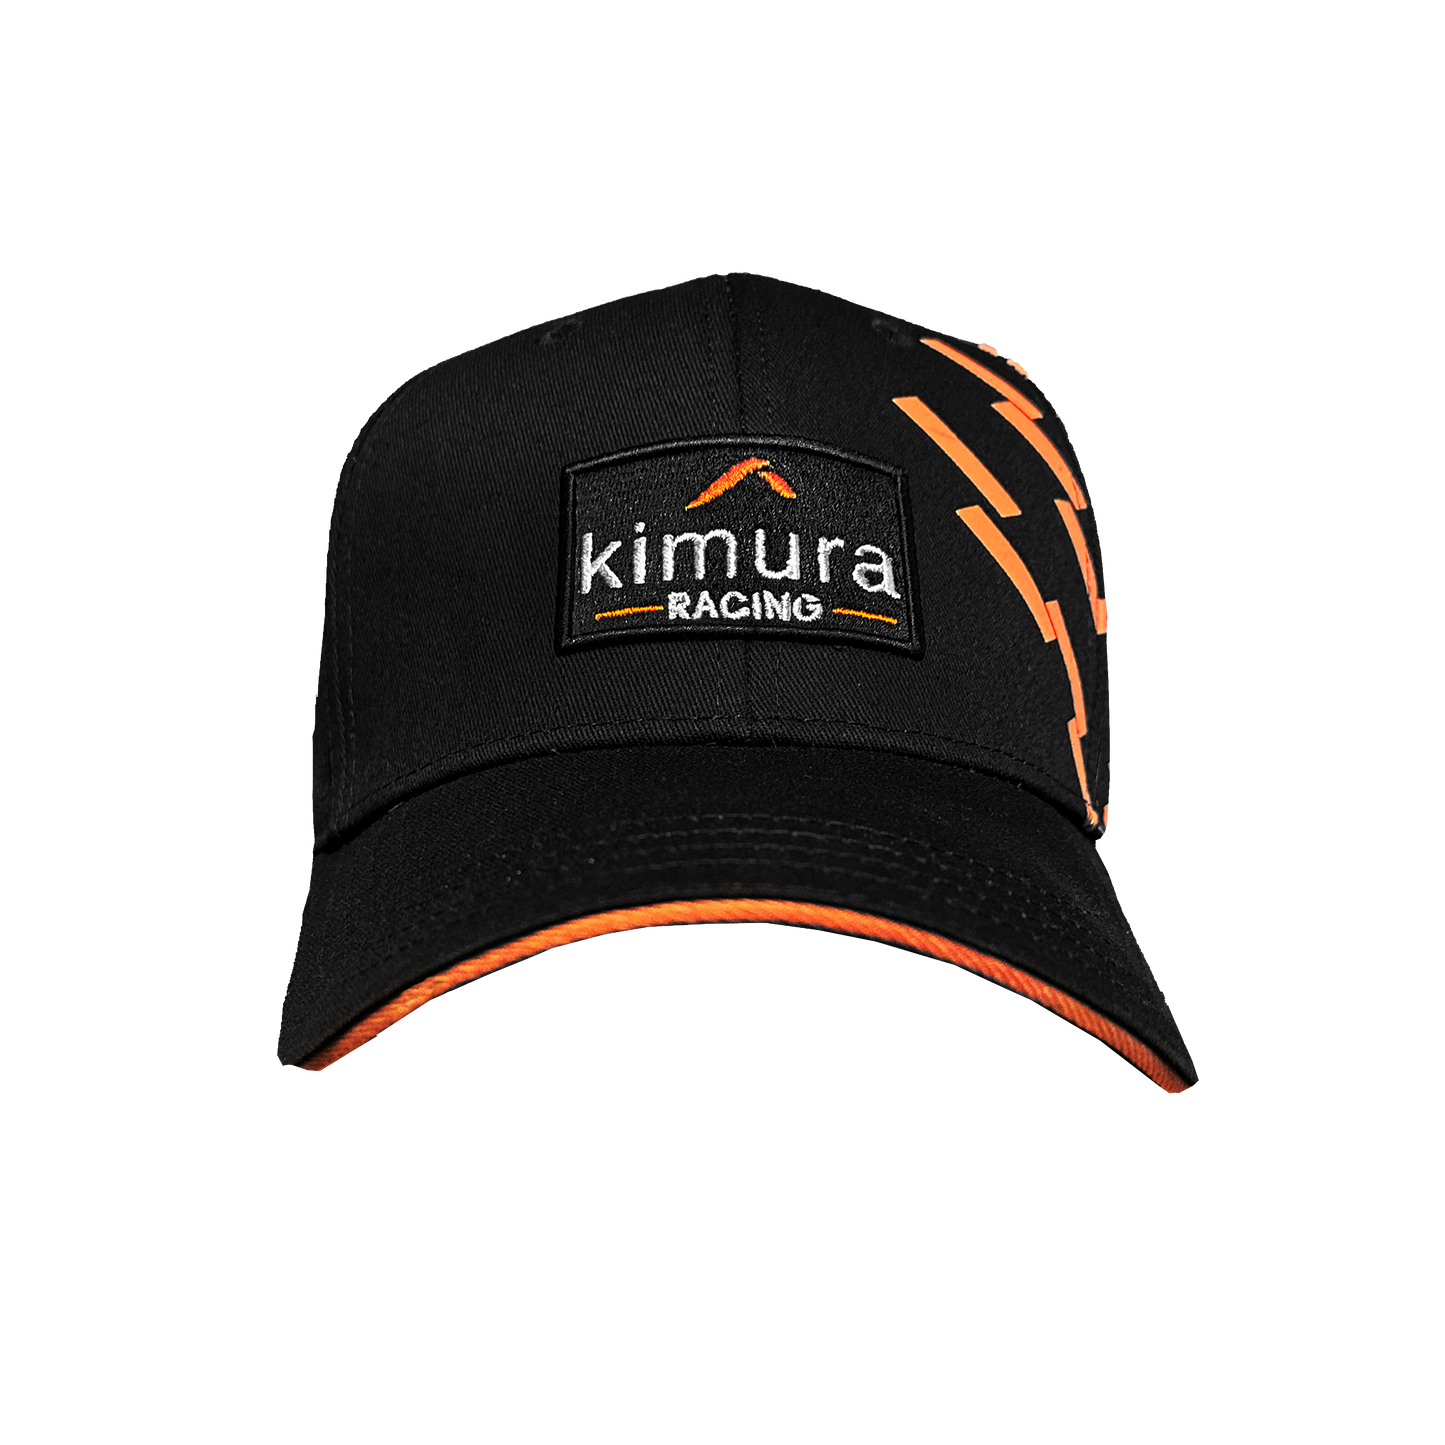 Kimura E-sport Race Team Caps